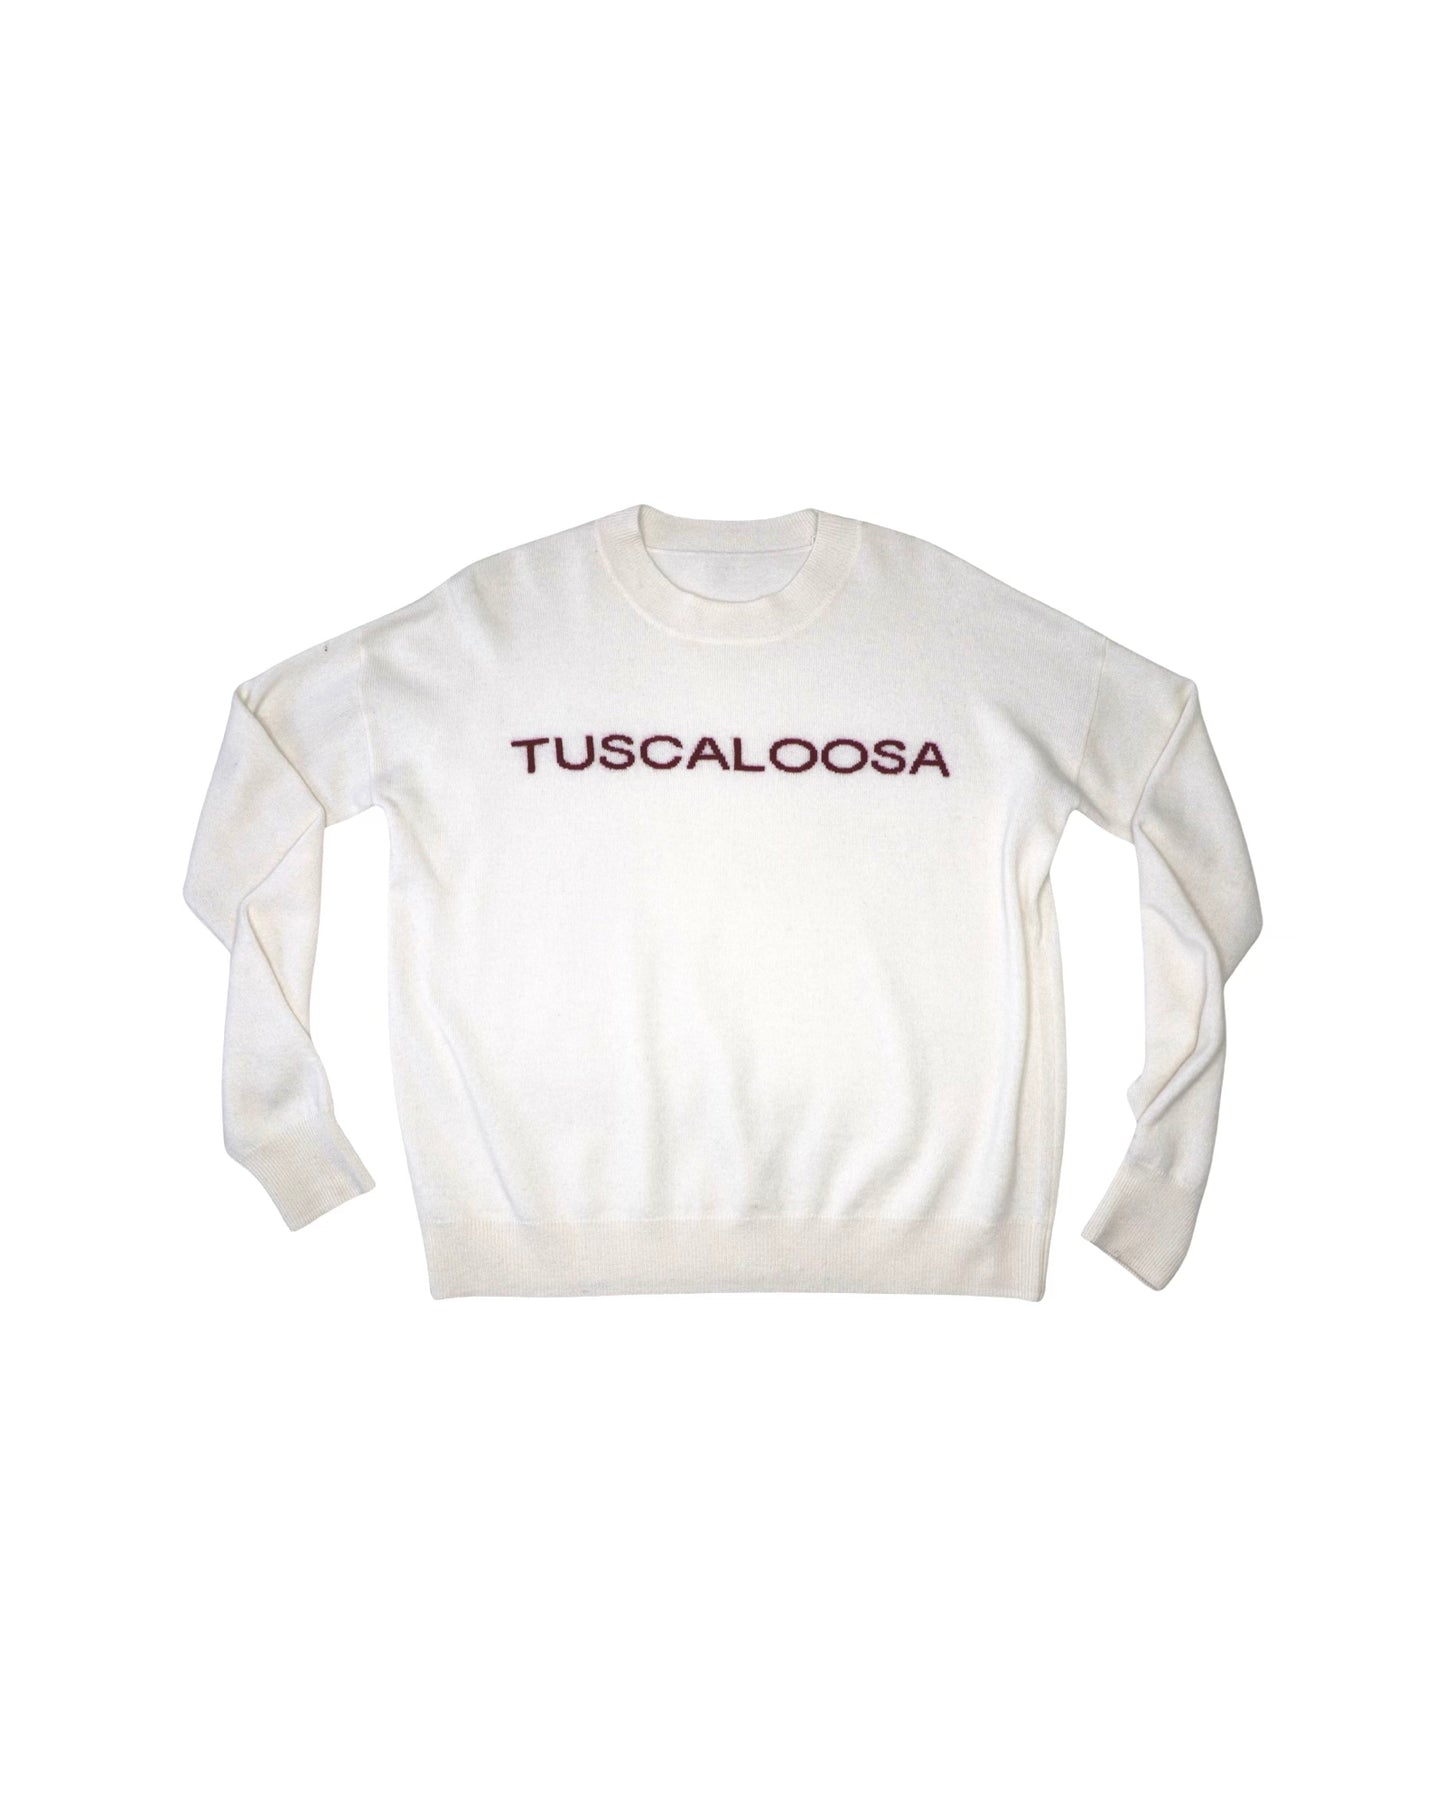 Tuscaloosa, Alabama Cashmere Sweater